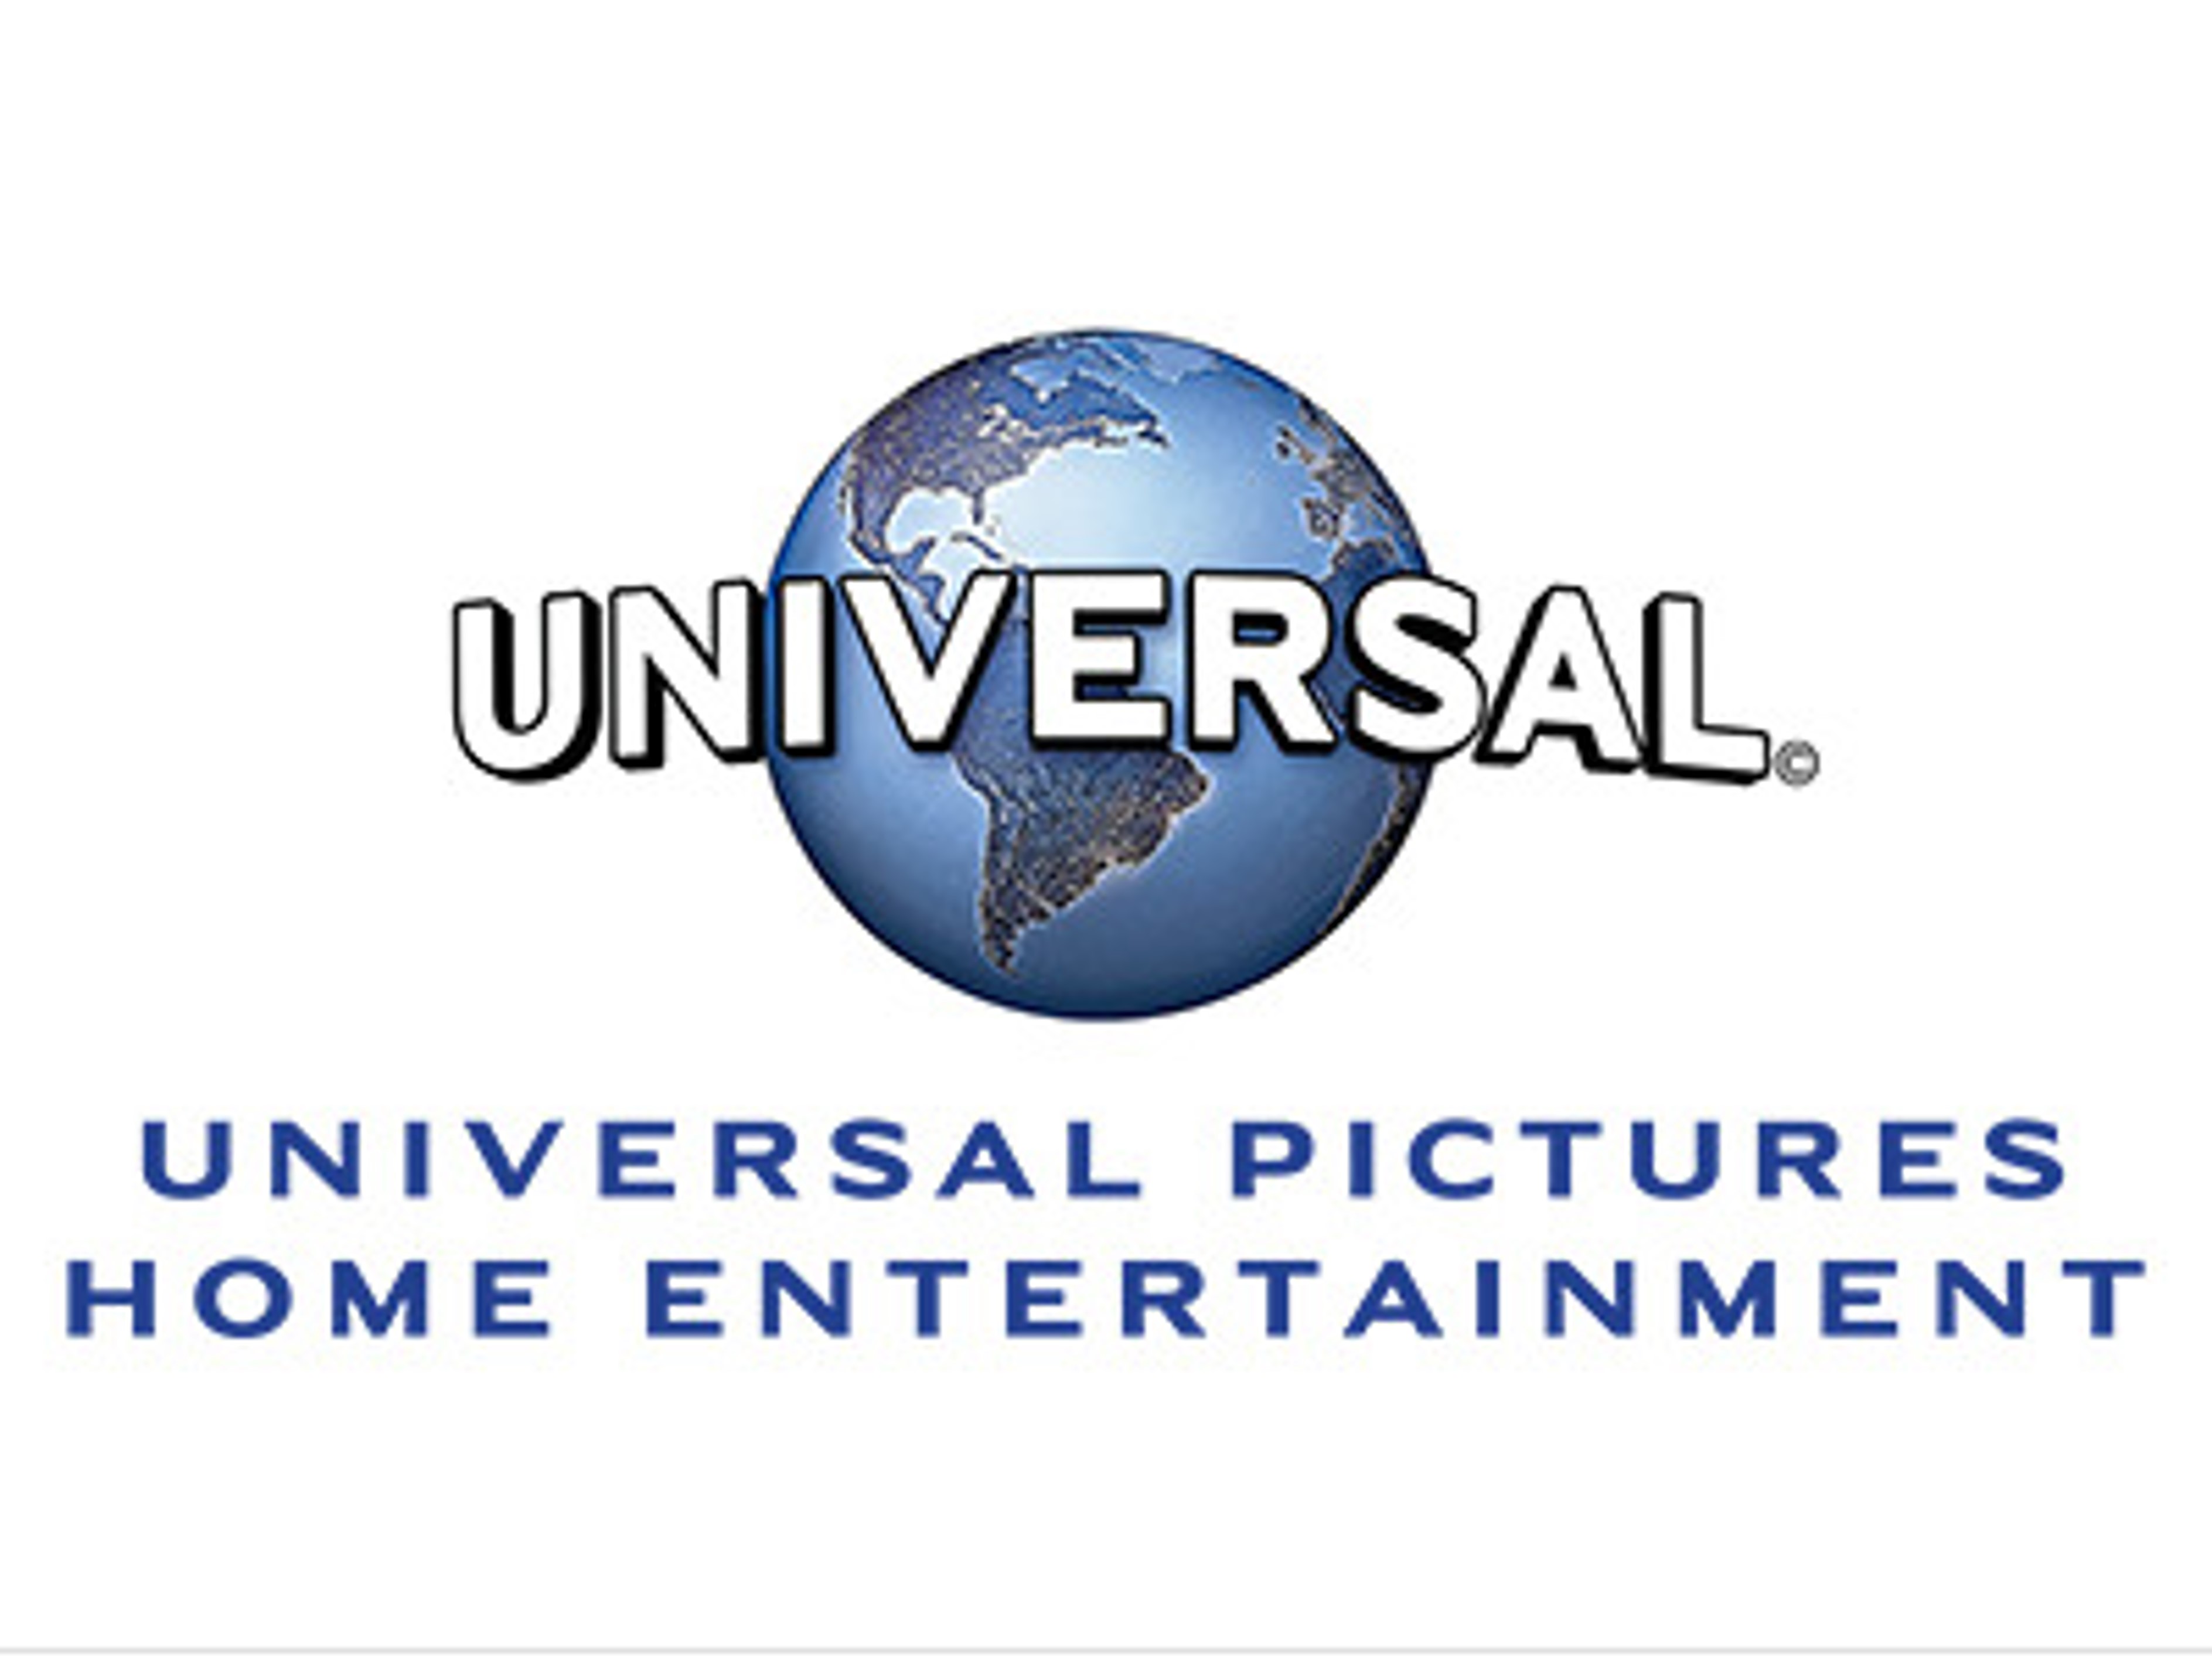 mca universal home video logo